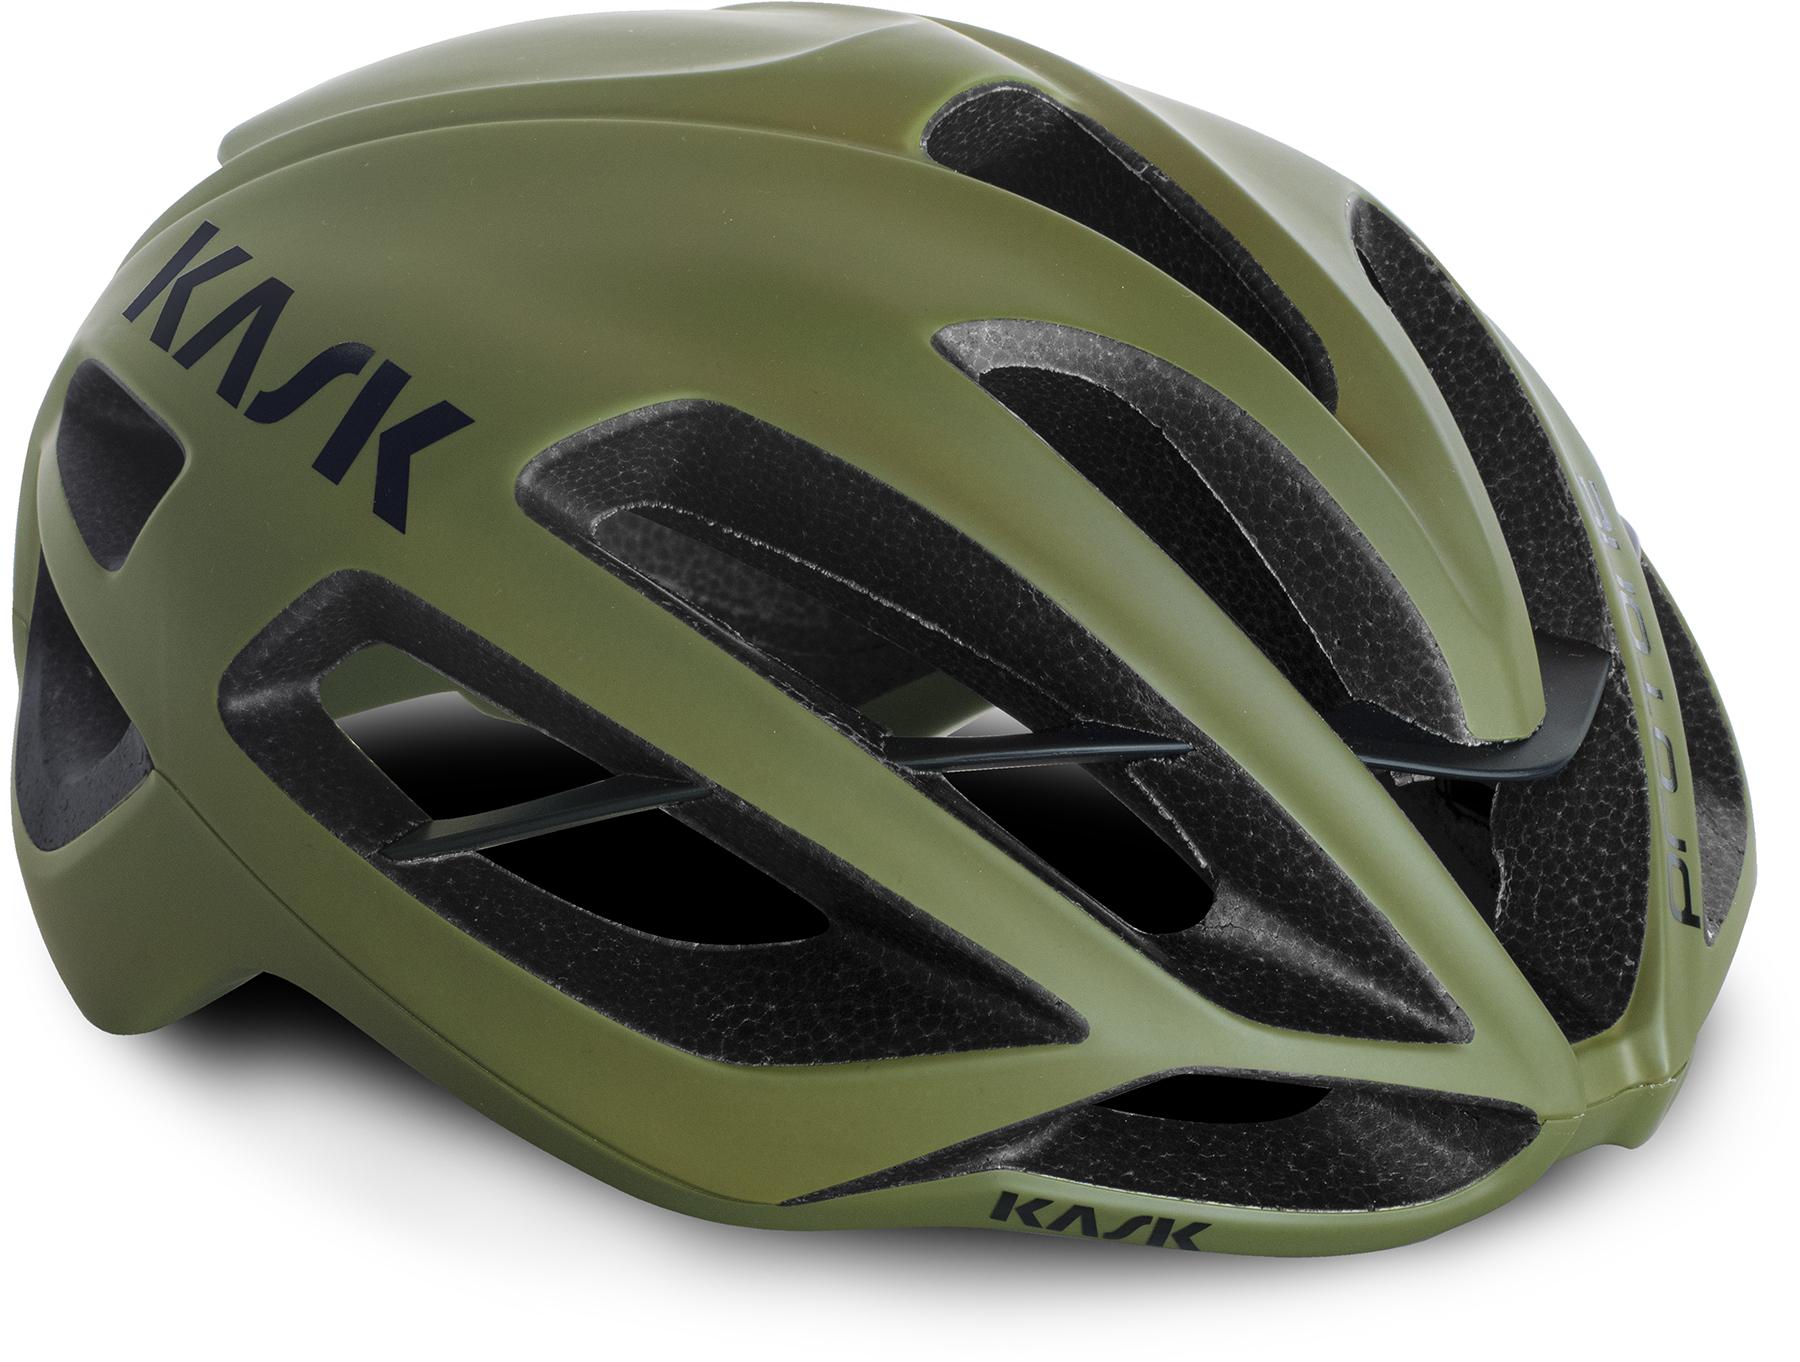 Kask Protone Road Cycling Helmet (matte Finish-wg11) - Olive Green Matte